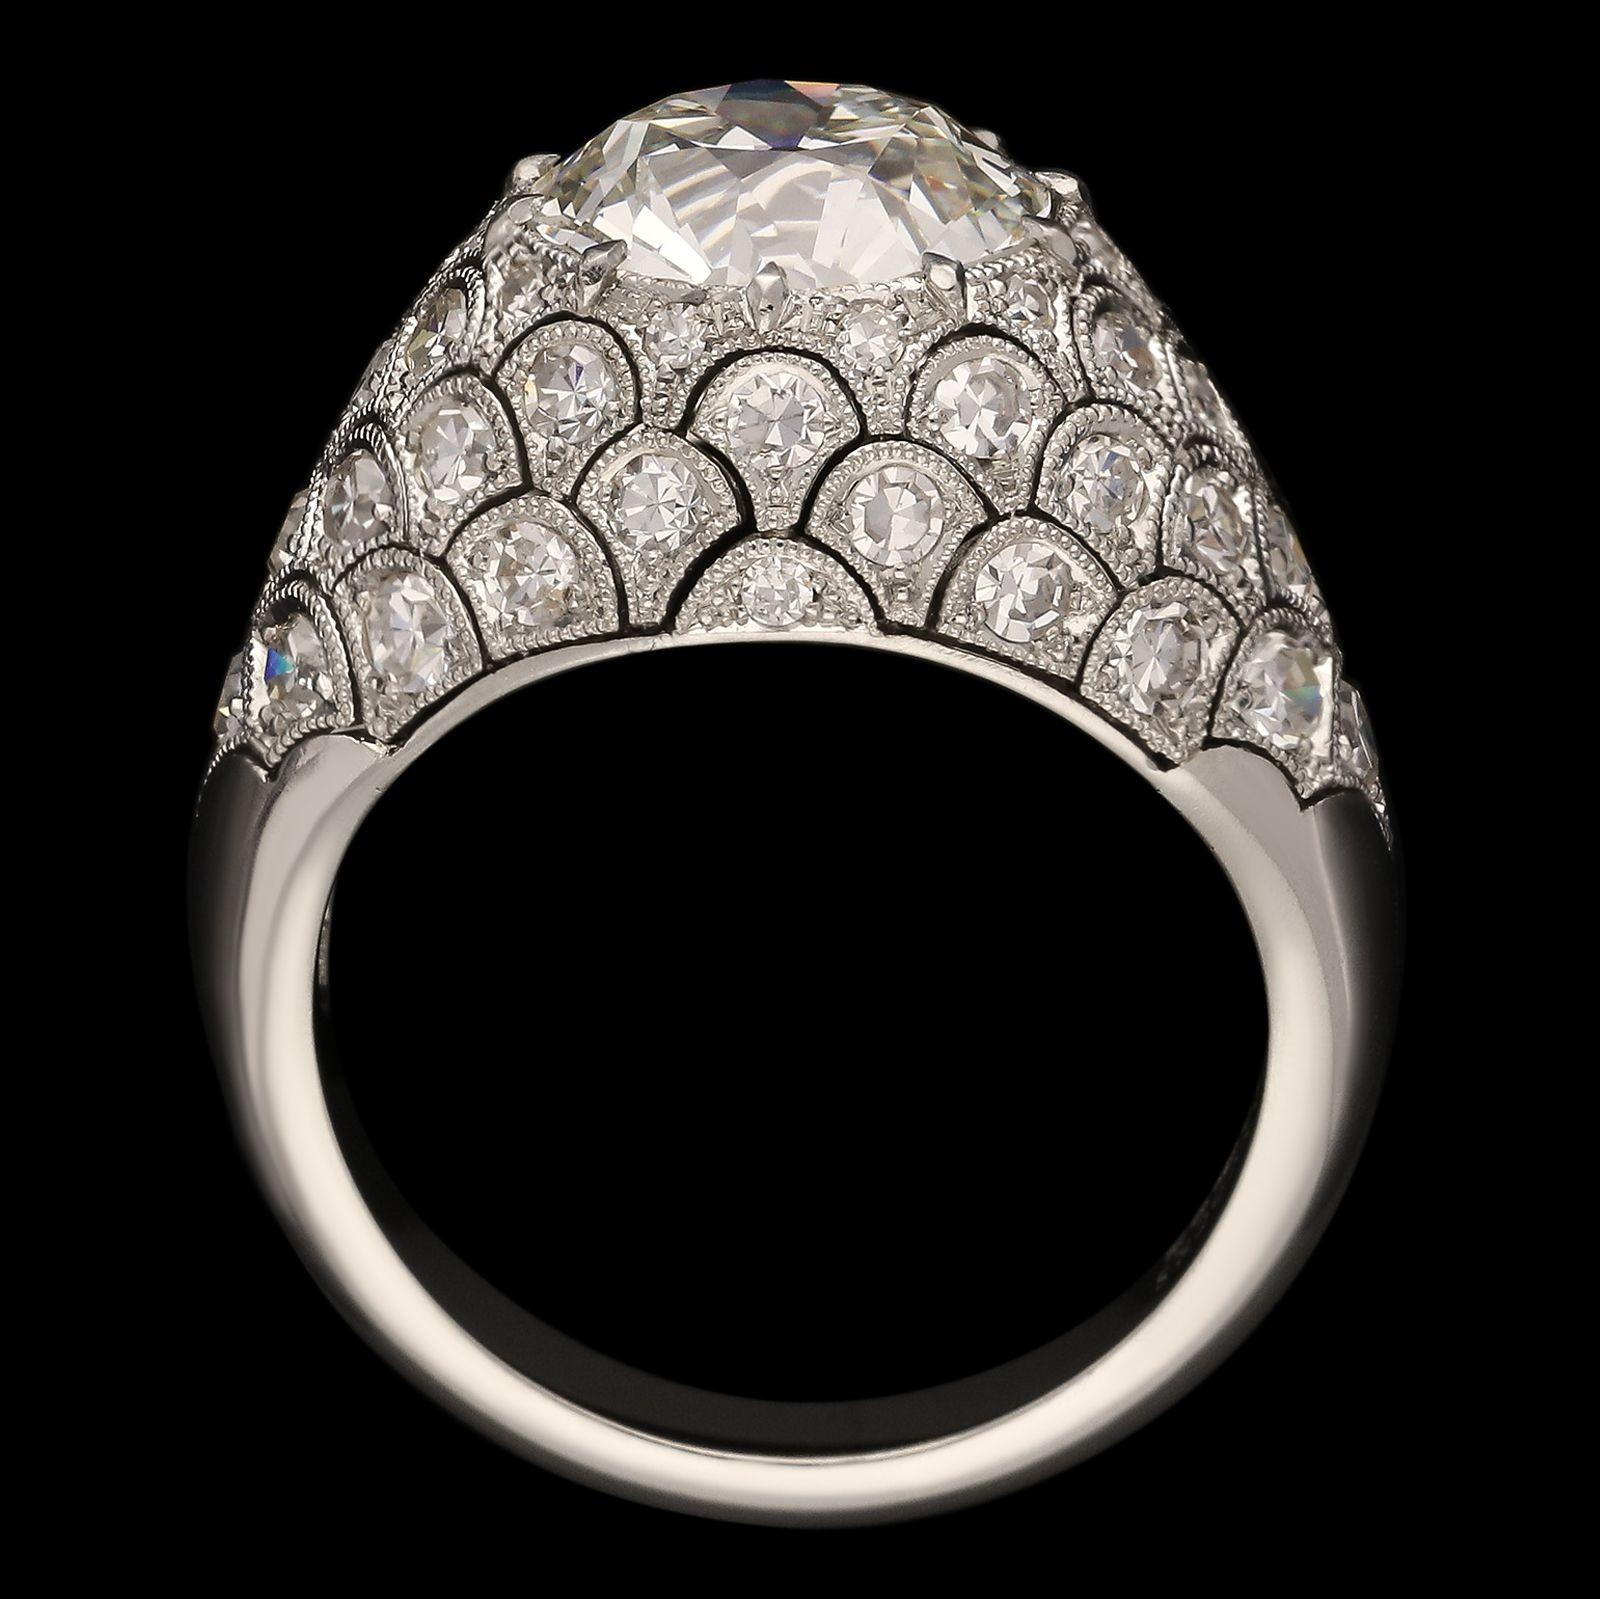 Hancocks 3.12 Carat Old European Brilliant Diamond Ring in Diamond Bombe Mount In New Condition For Sale In London, GB